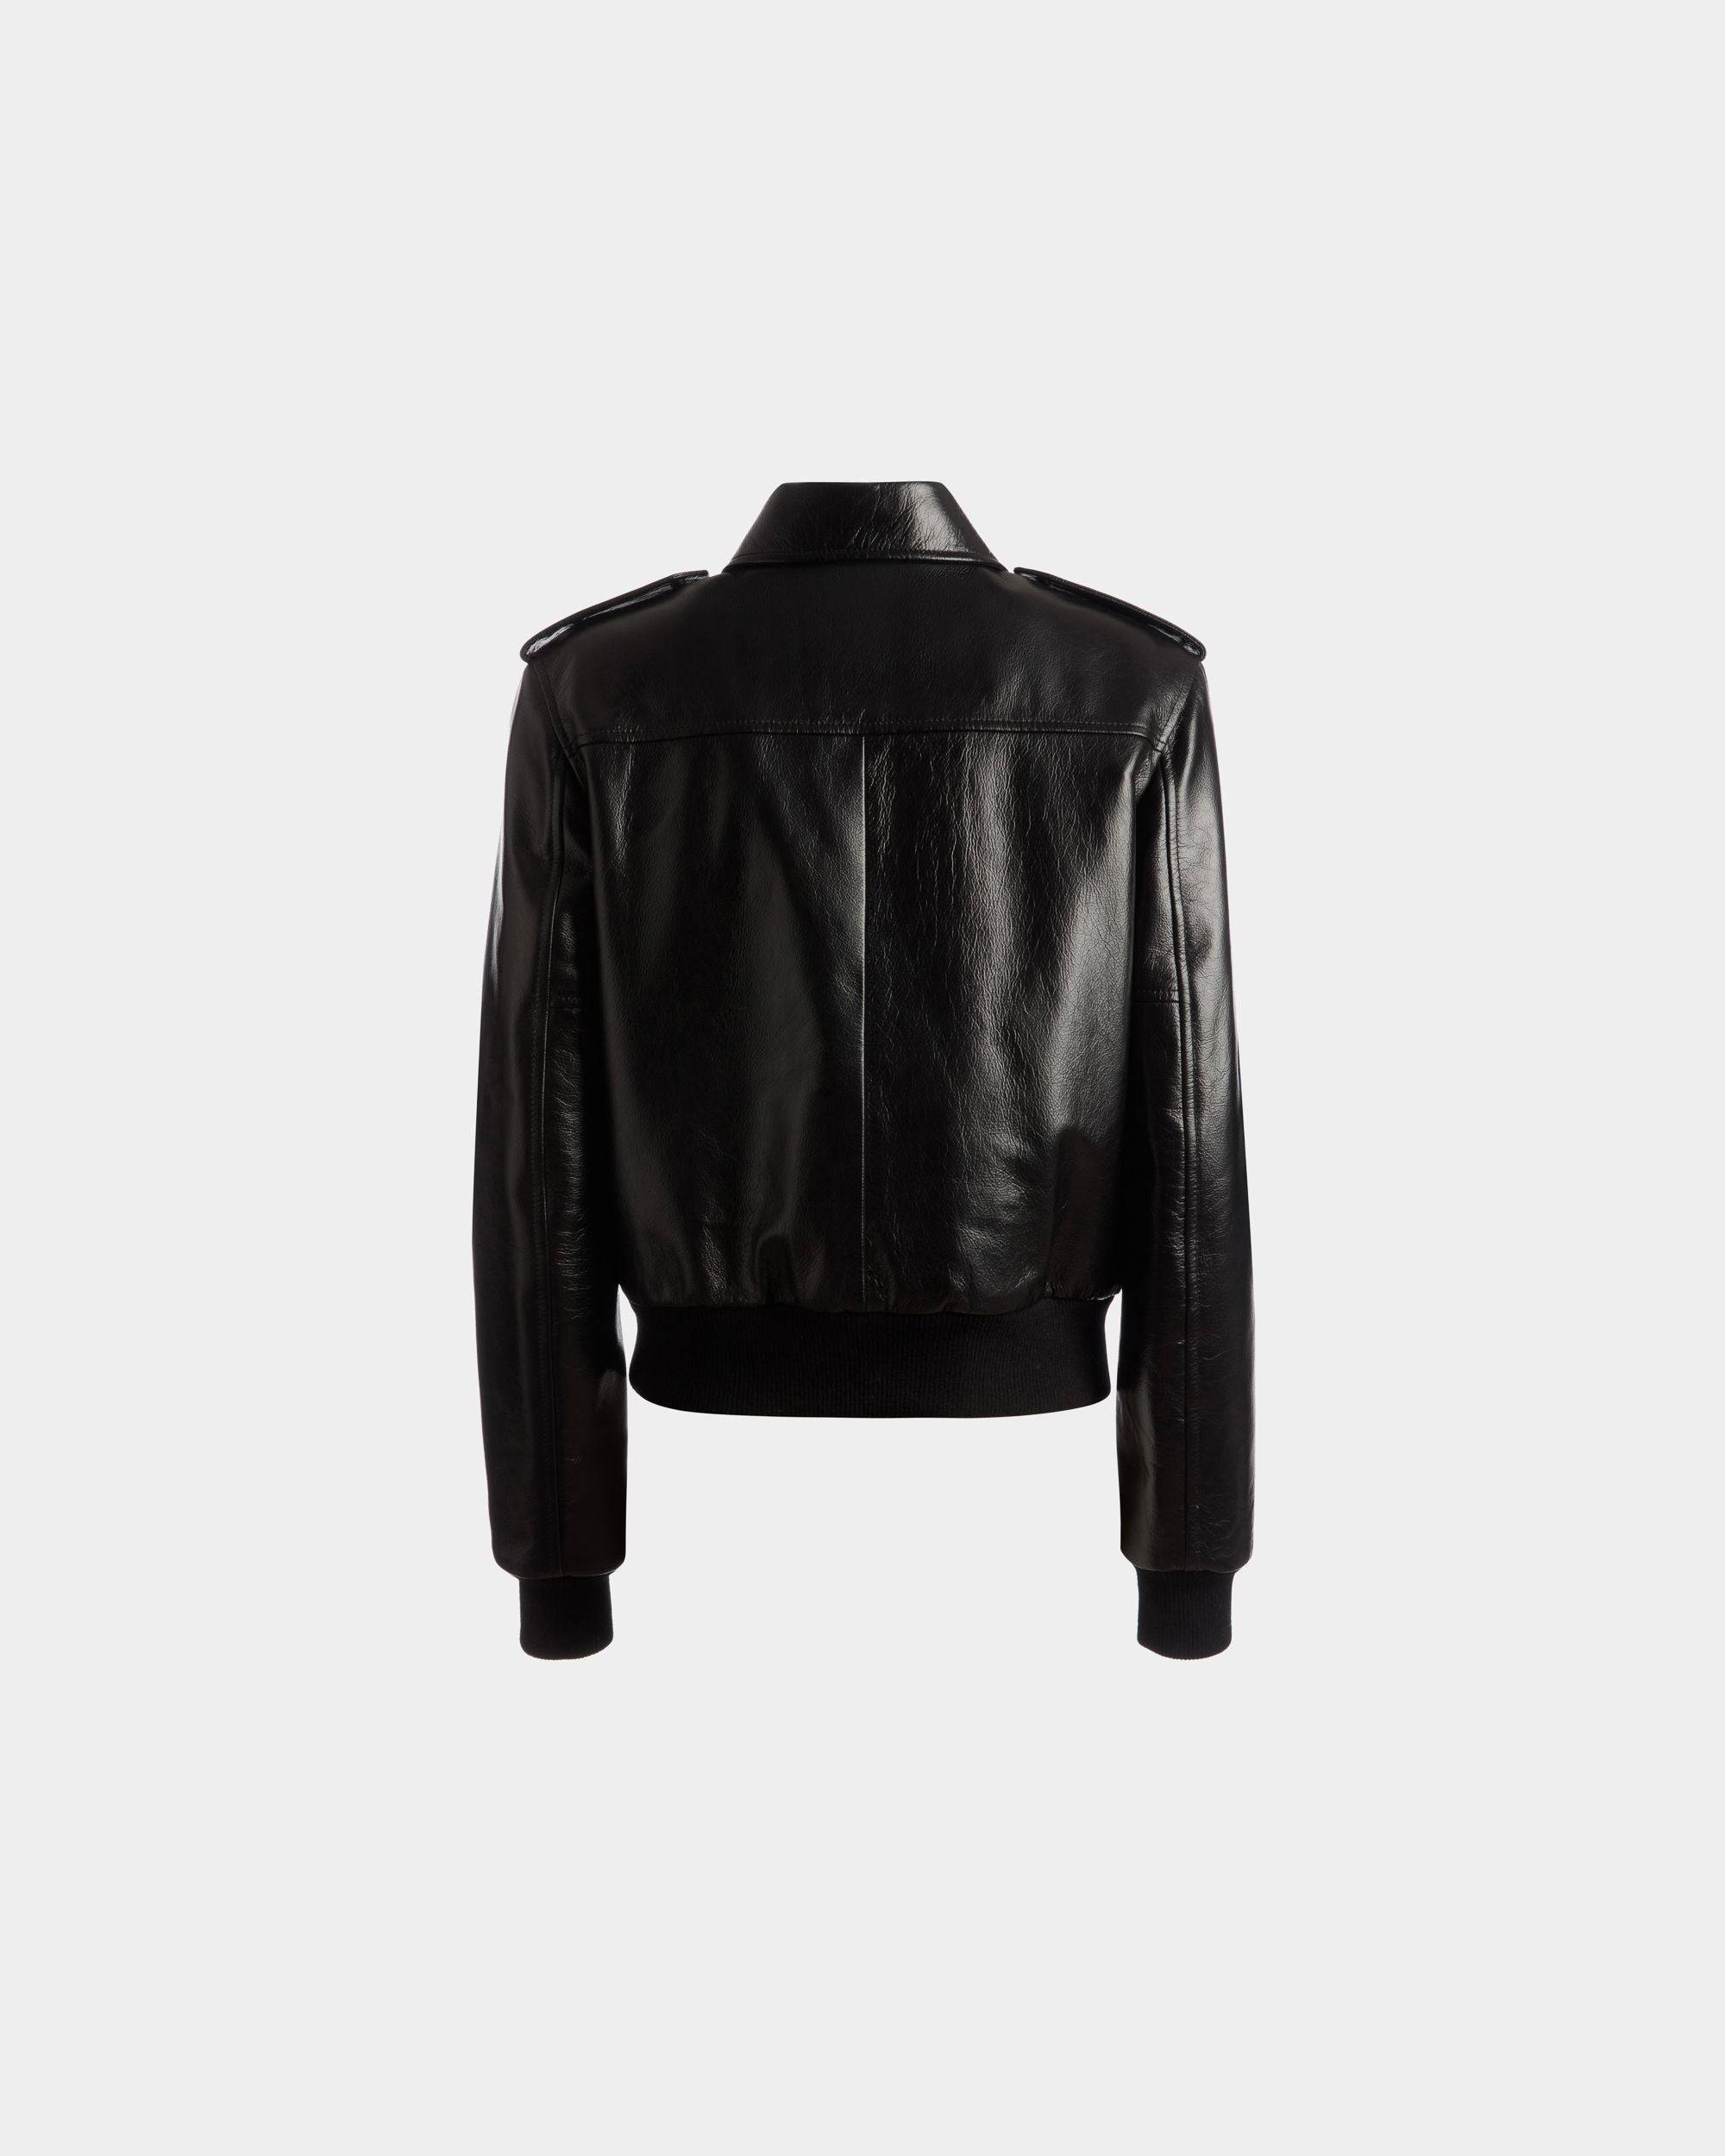 Bomber Jacket | Women's Outerwear | Black Leather | Bally | Still Life Back